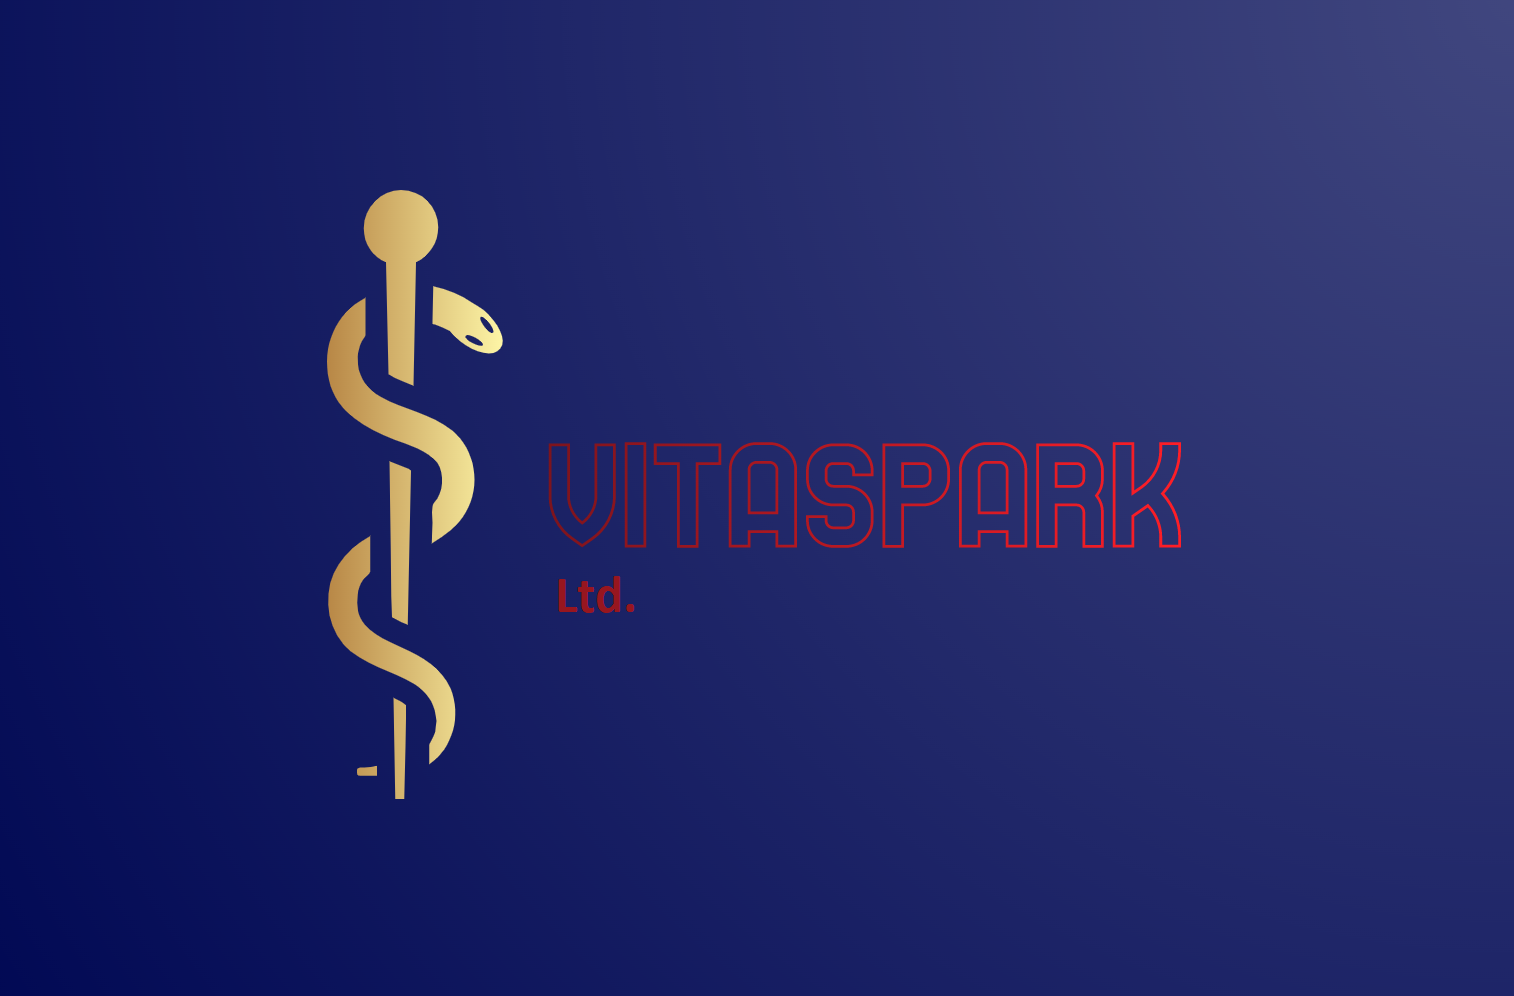 Logo of VITASPARK LTD Career Guidance Services In Dungannon, Northern Ireland